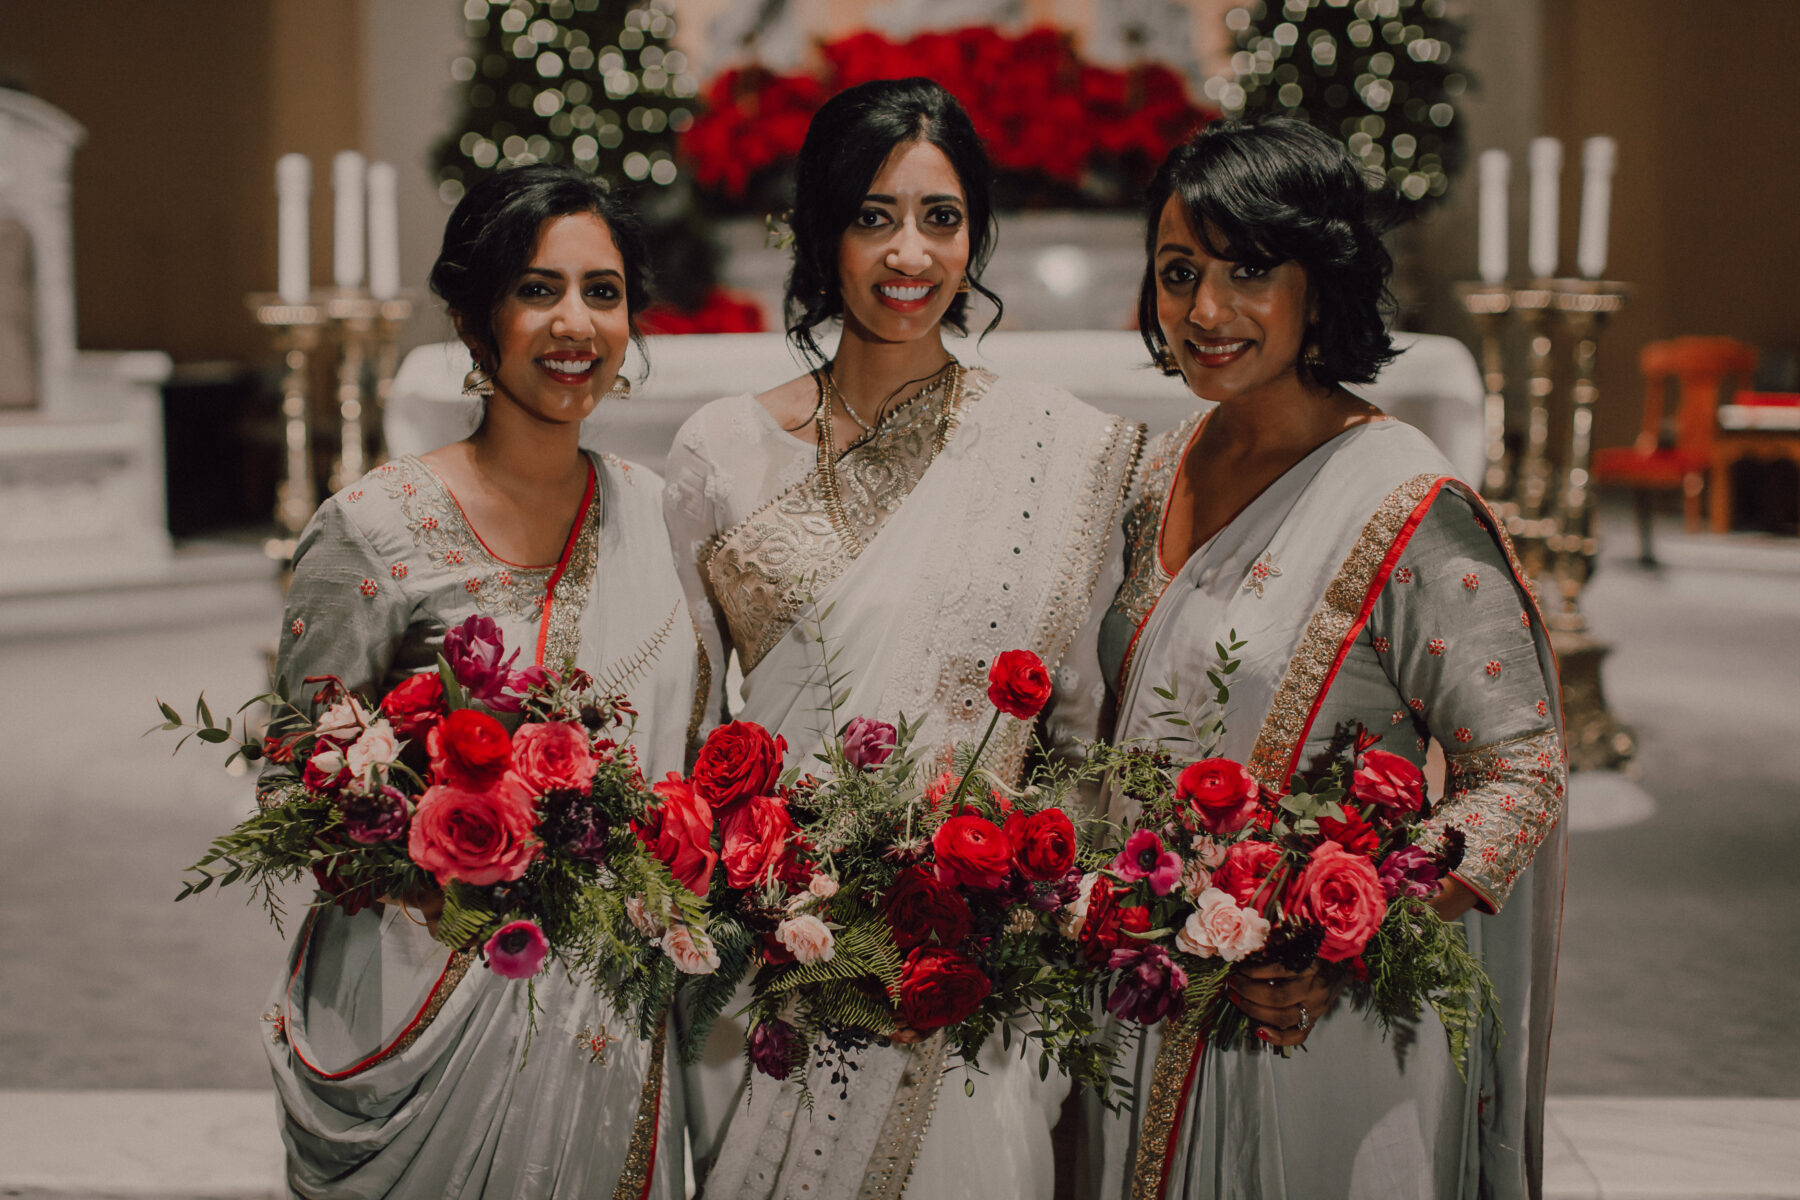 Red winter wedding bouquets | Nashville Bride Guide